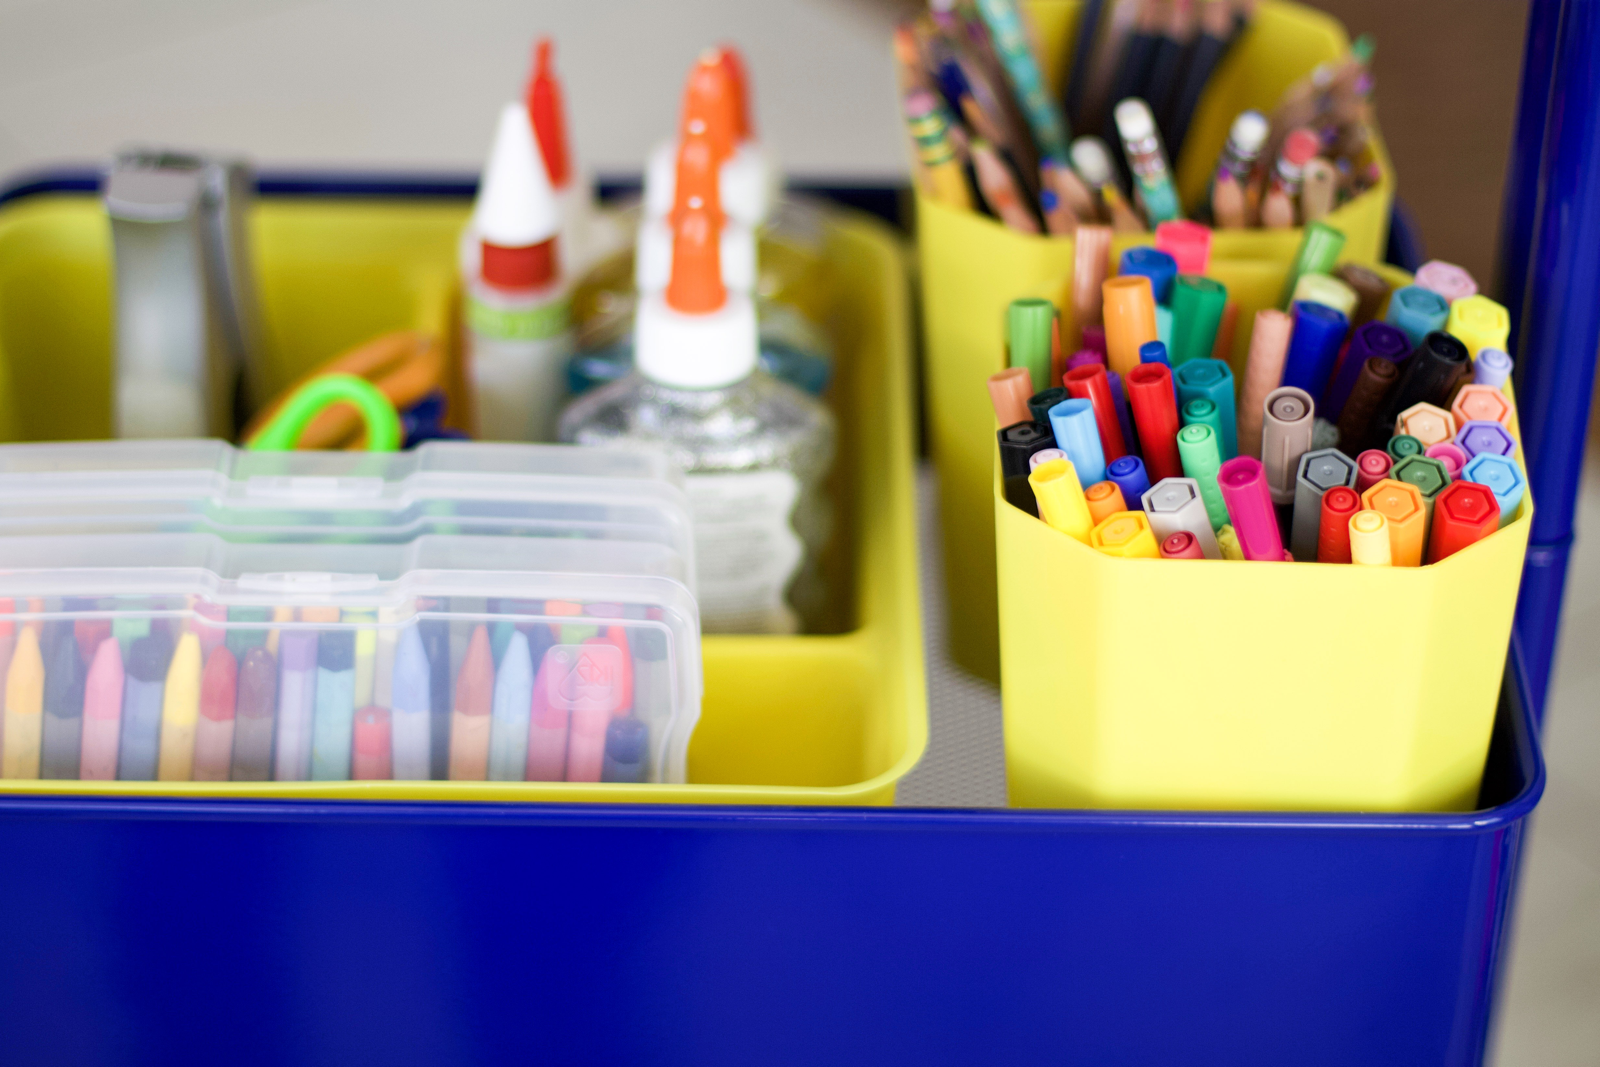 Kids Art Cart, Storage System, and Organization Tips